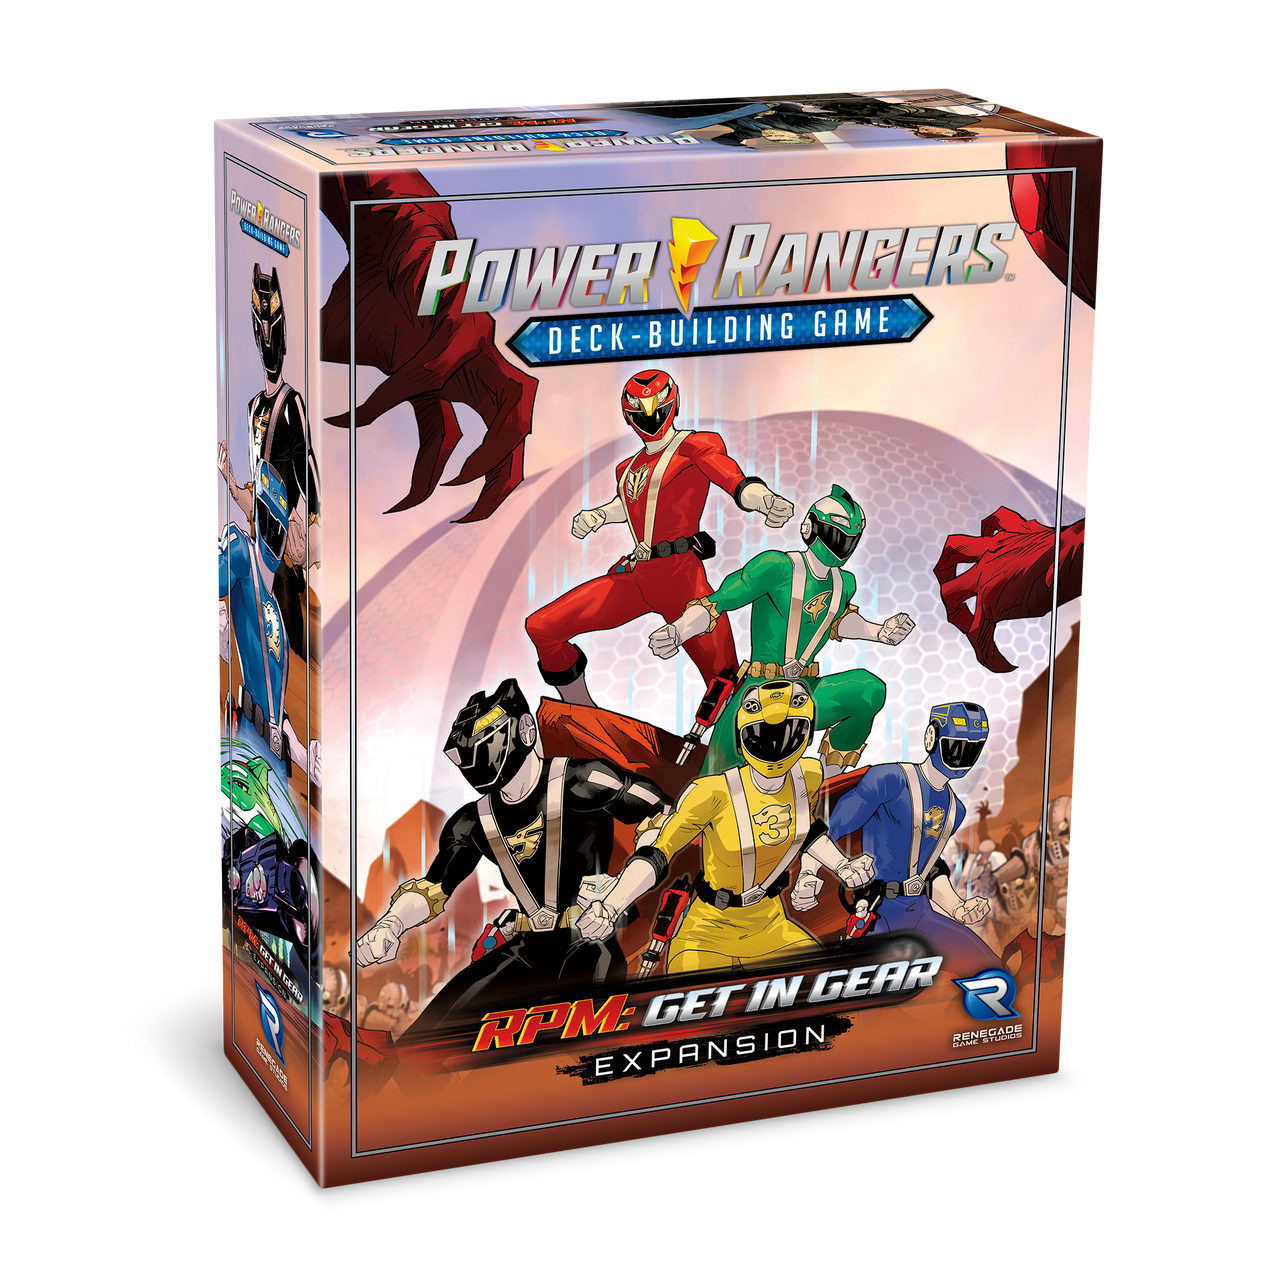 Power Rangers: Deck Building Game - RPM: Get In Gear